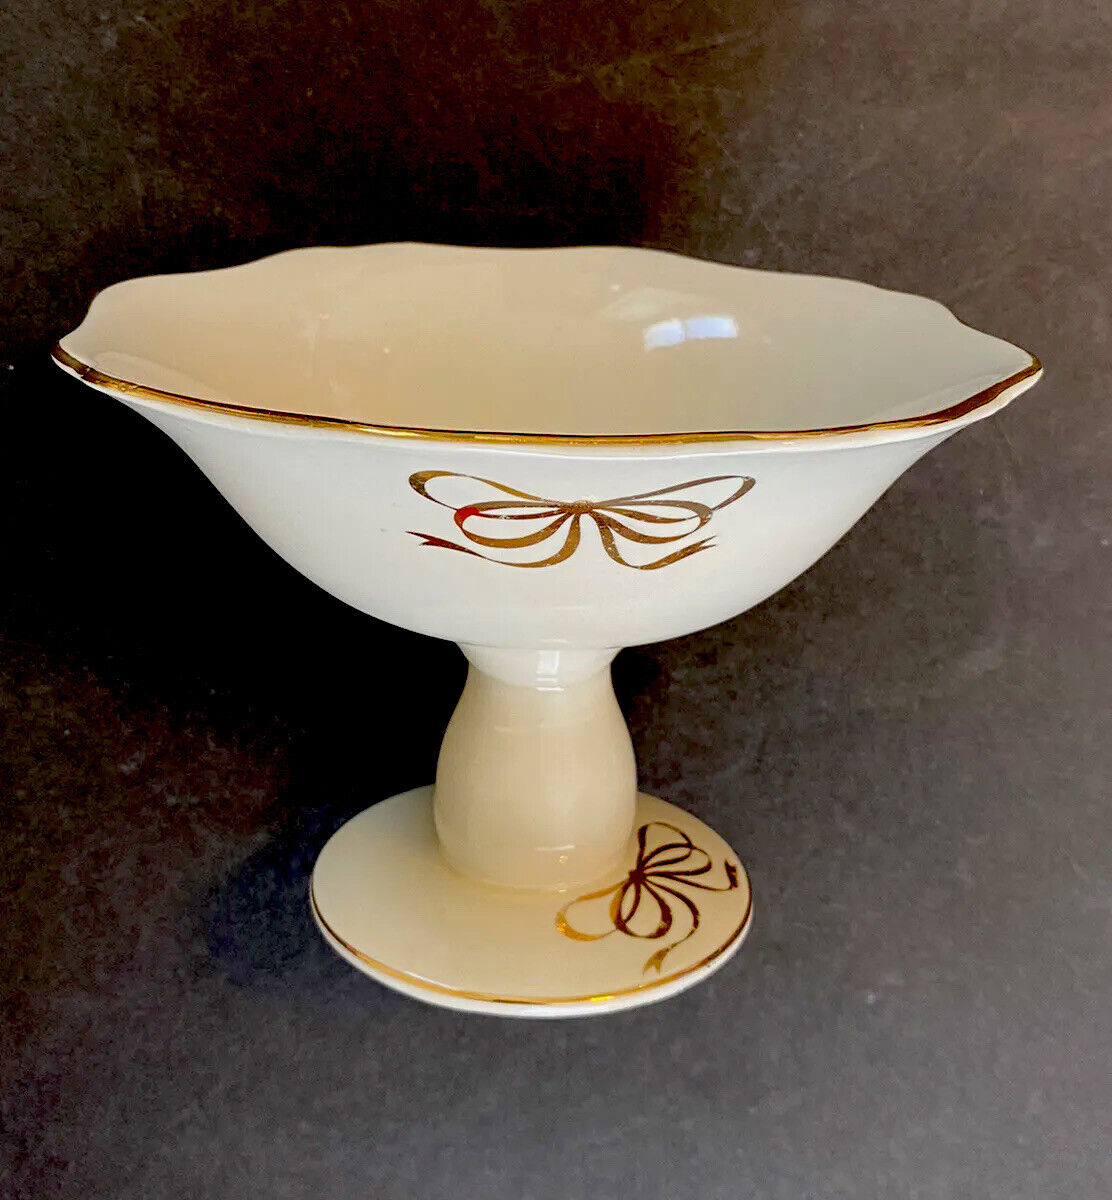 VTG Porcelain Pedestal Candy Dish Bowl Gold Gilt Ribbons Decorative Cream